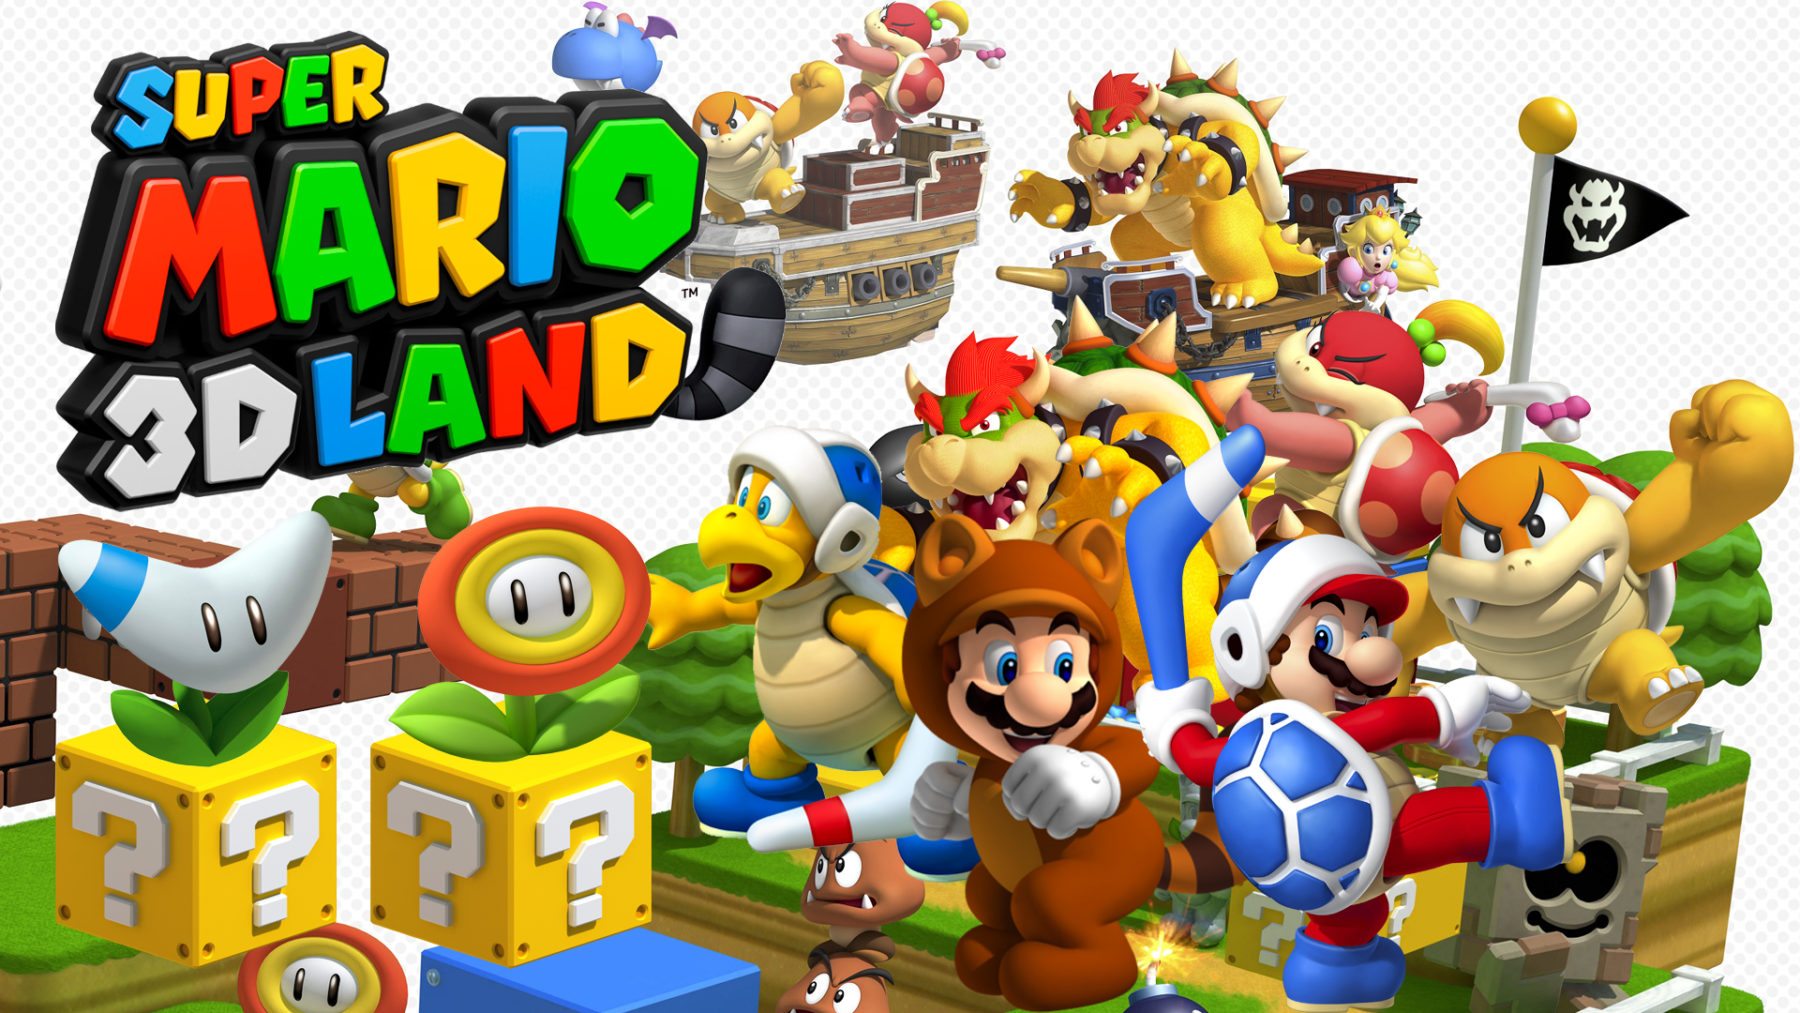 Super Mario 3D Land for Nintendo 3DS - Nintendo Game Details